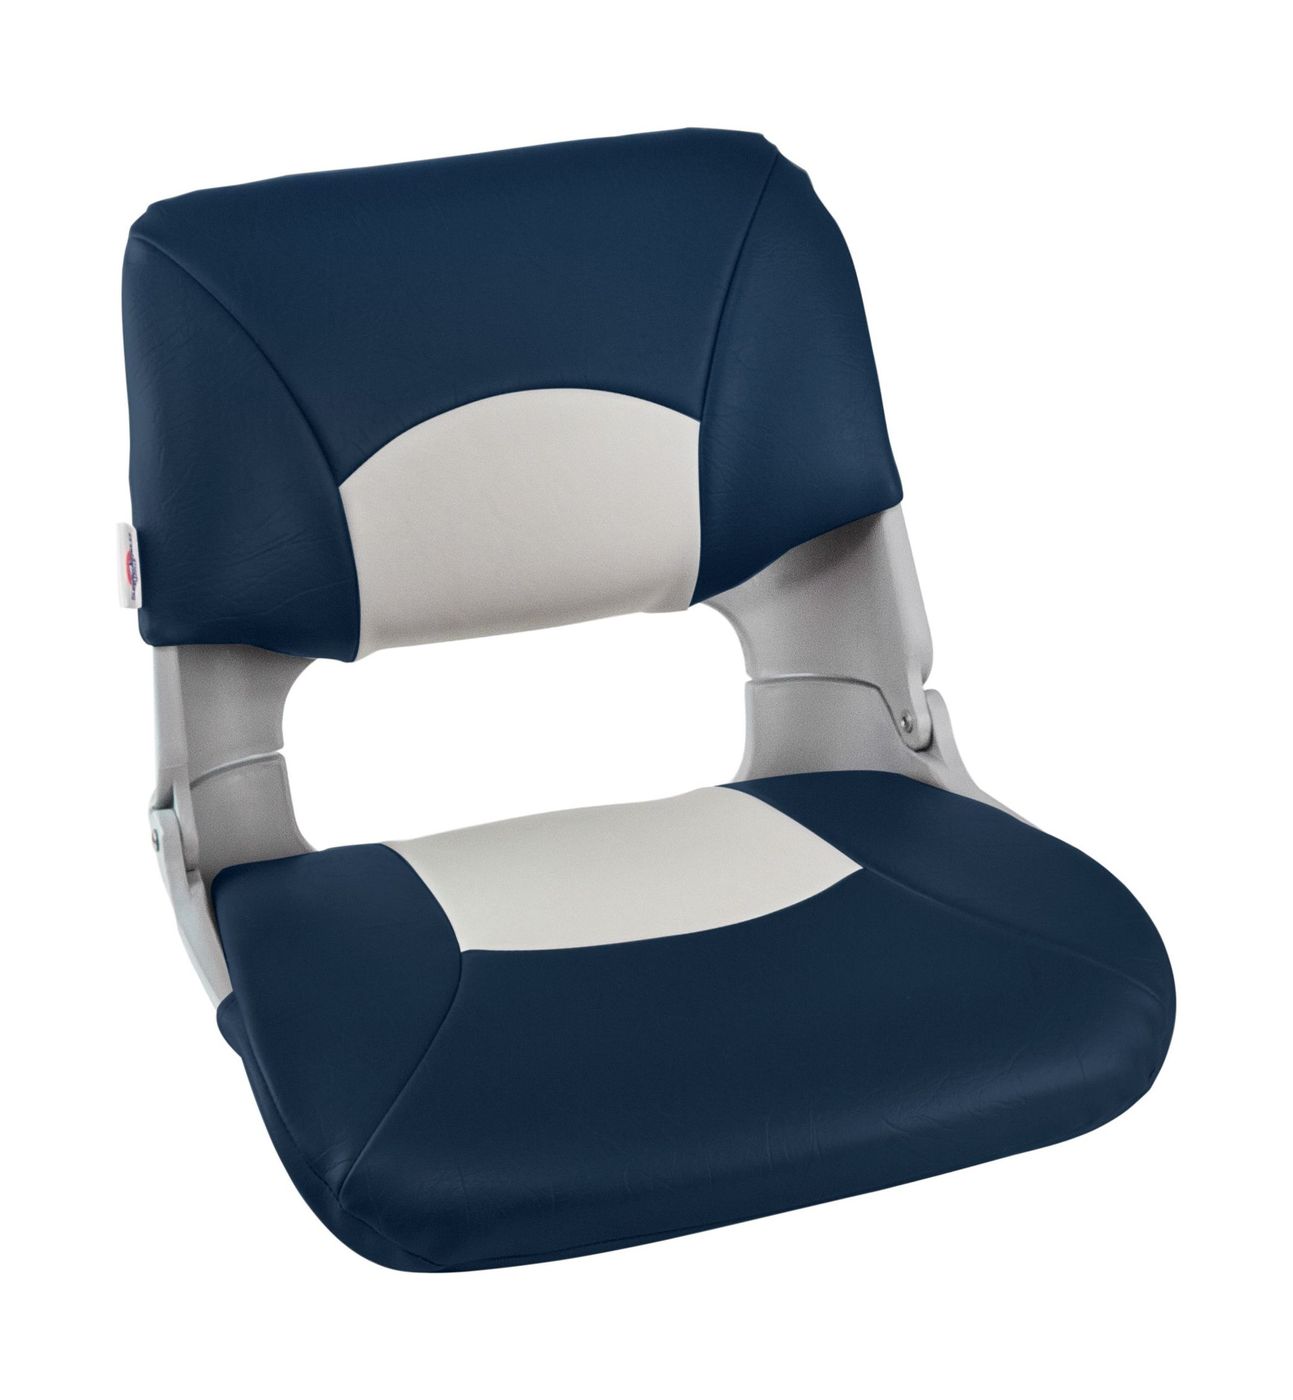 Кресло складное мягкое SKIPPER, цвет серый/синий 1061019 кресло складное мягкое classic low back seat серый синий 75102gb